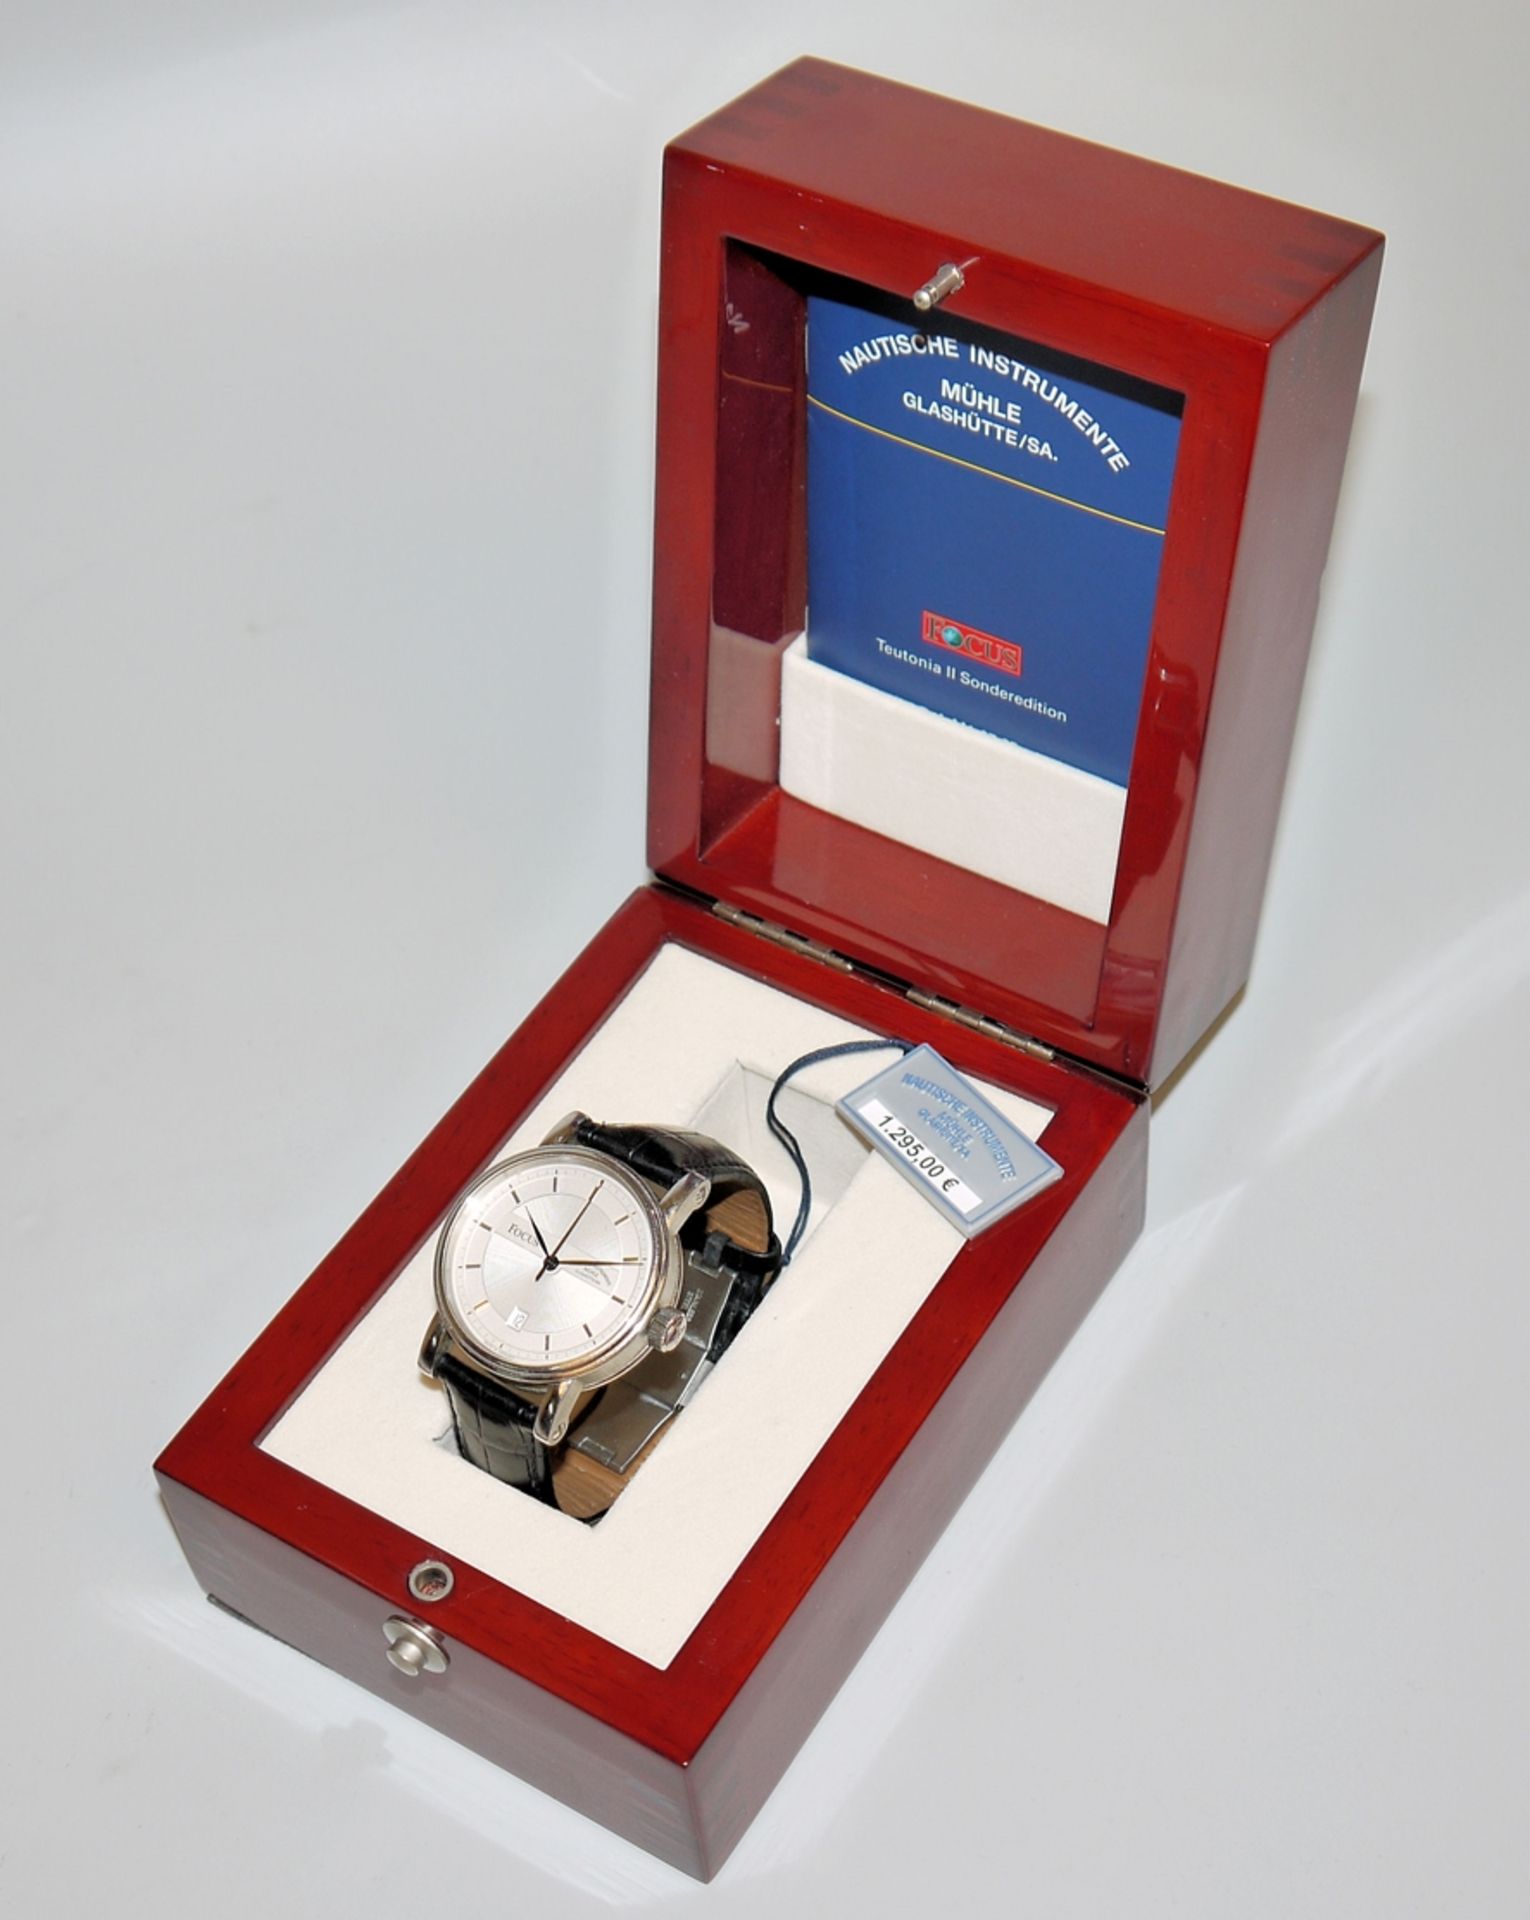 Teutonia II, men's wristwatch by Mühle Glashütte, special edition "Focus", practically unworn - Image 2 of 2